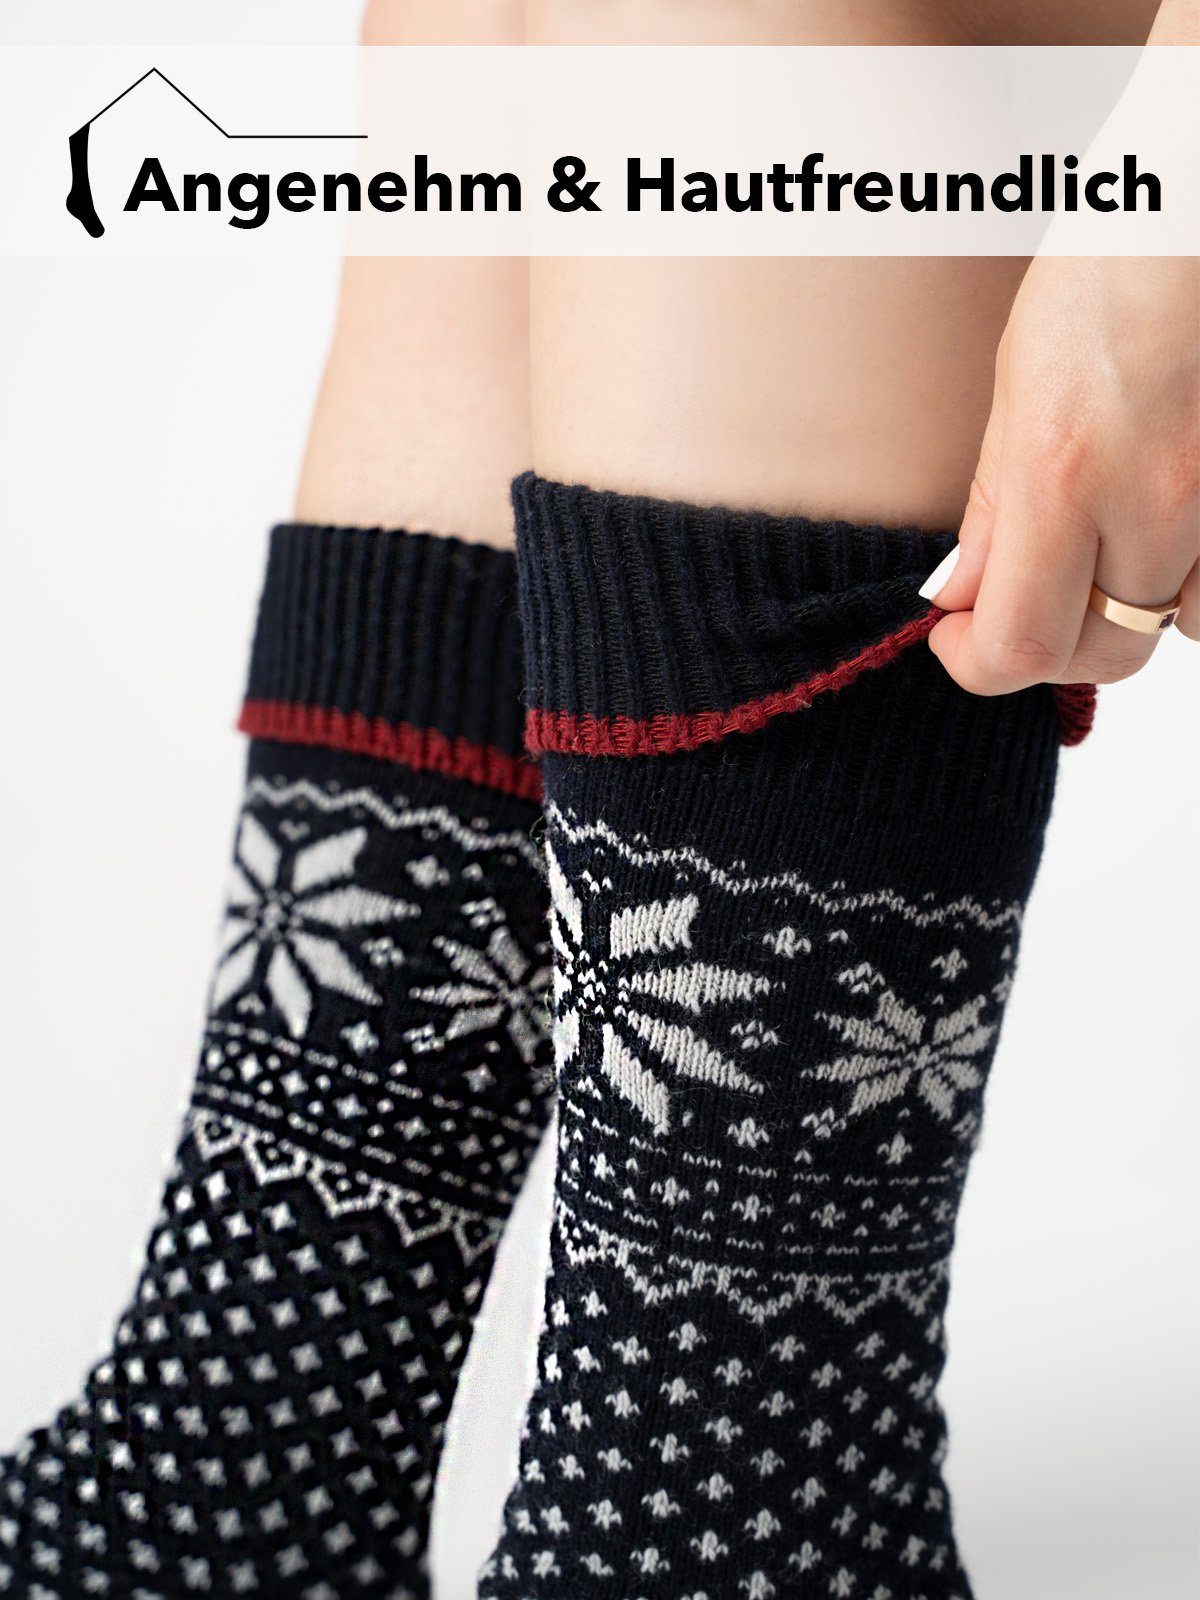 HomeOfSocks Socken Skandinavische Wollsocke "Norwegen-Lammwolle" Socken In Lamm Kuschelsocken 70% Navy Nordic Warm Aus Norwegischem Hyggelig Dicke Wolle Mit Wollanteil Design Hohem